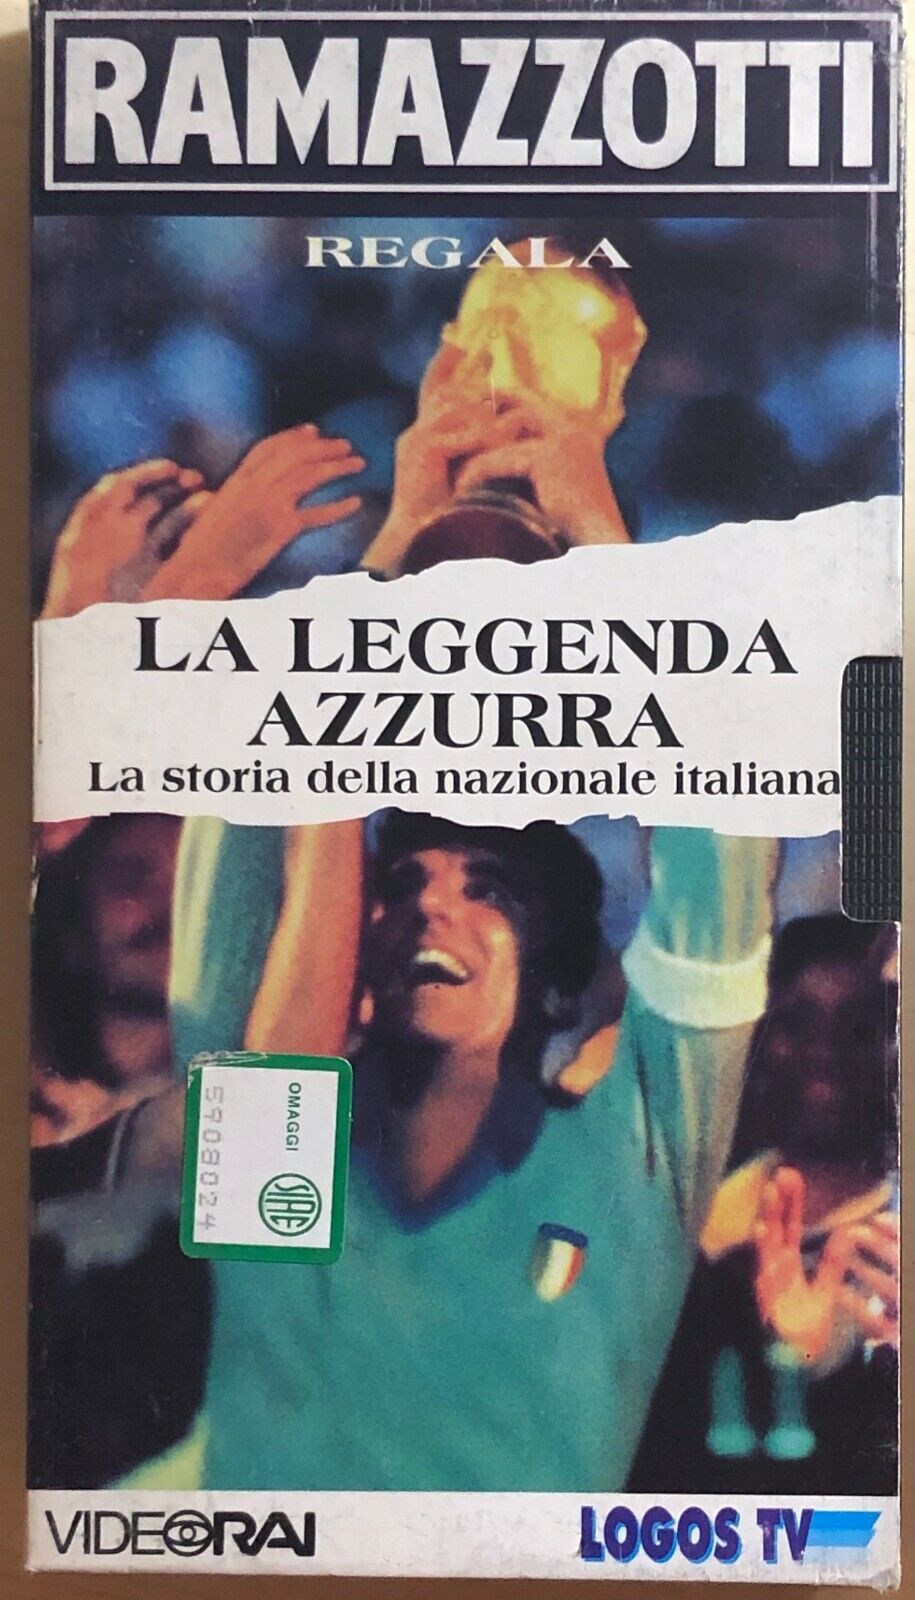 Ramazzotti regala La leggenda azzurra VHS  di Logos Tv,  1995,  Videorai